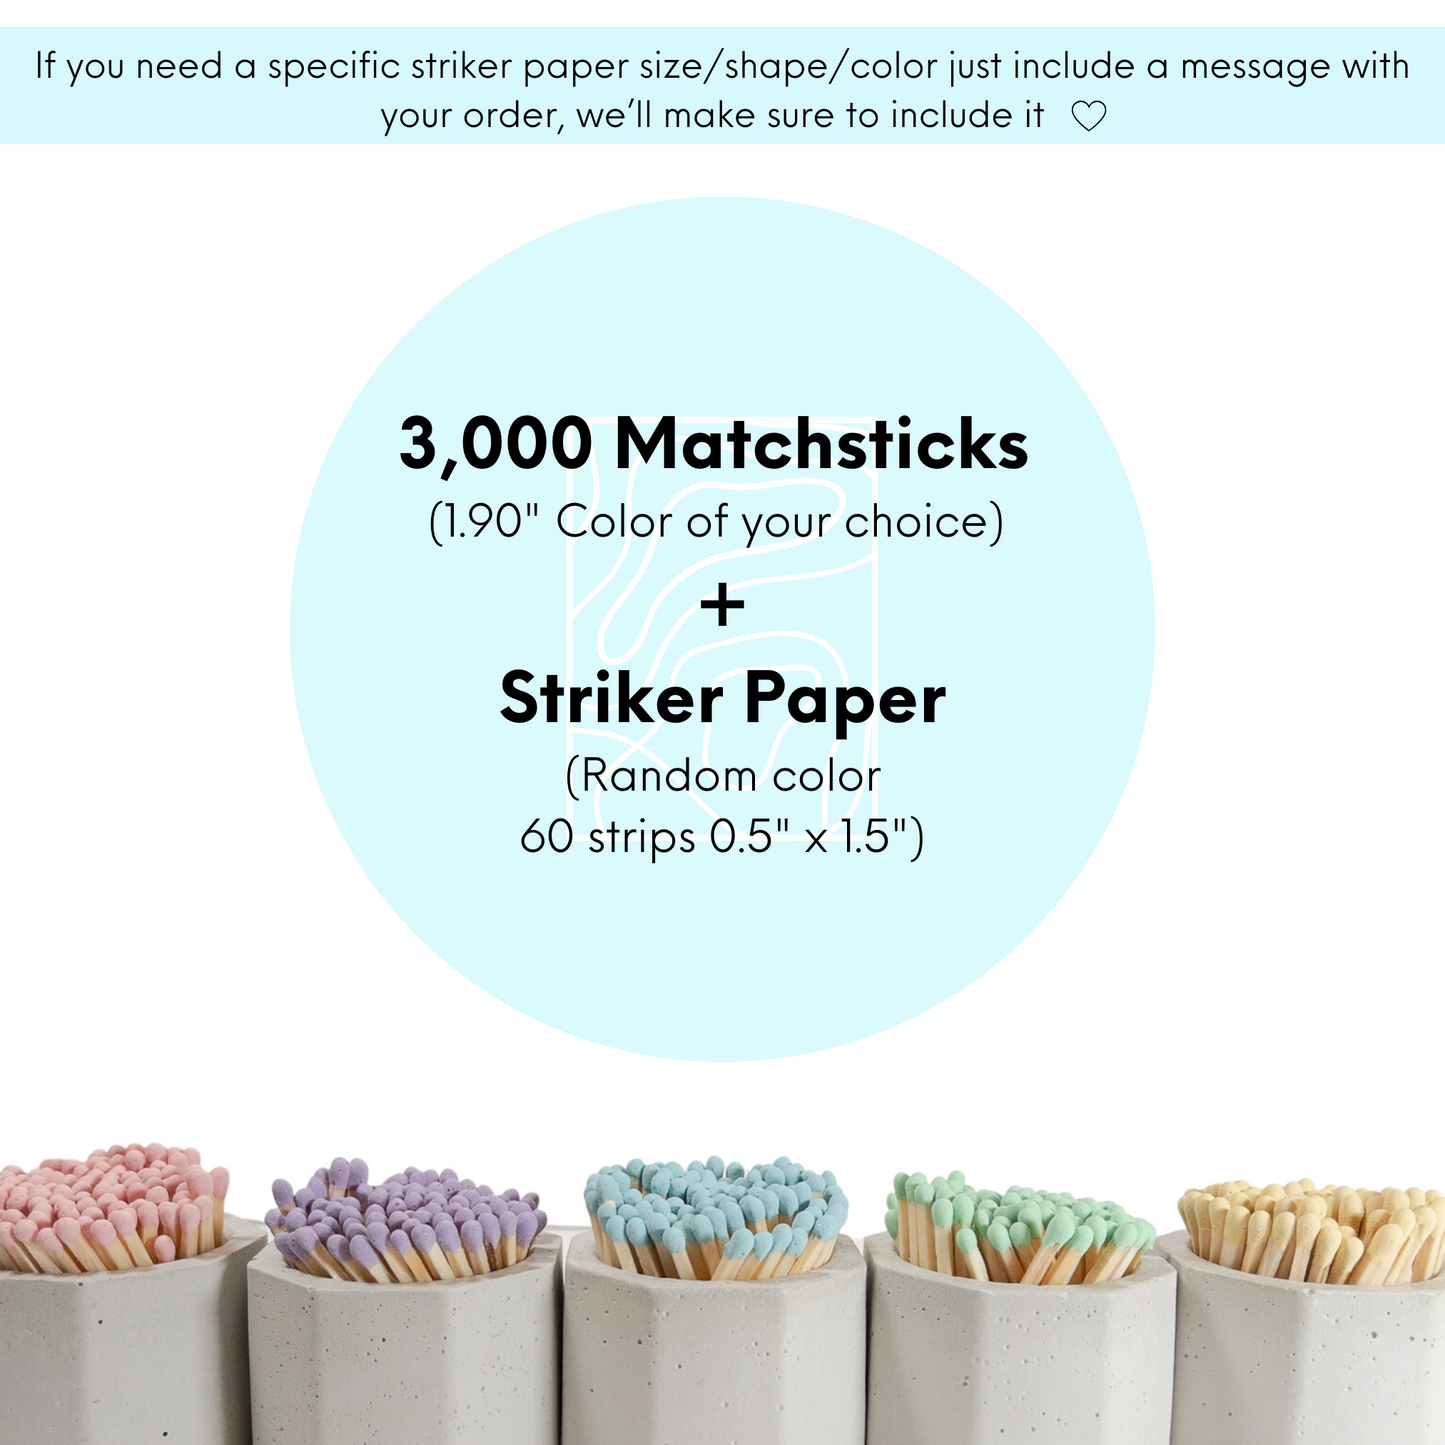 1.90" Safety Matches - 500 to 10,000 Matchsticks